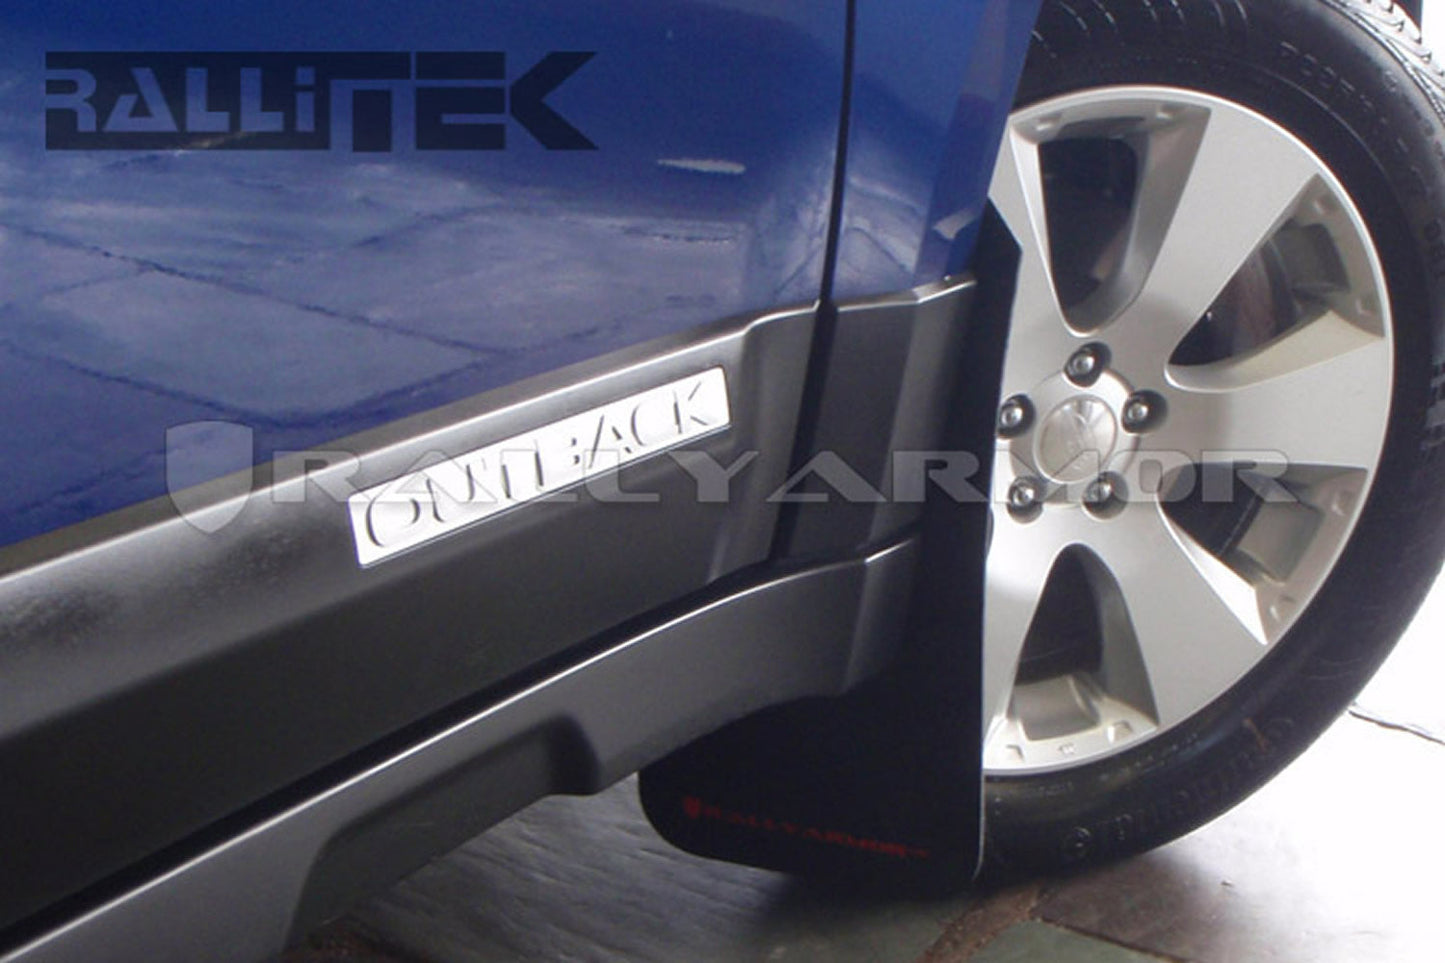 Rally Armor UR Mud Flaps - Fits Subaru Outback 2010-2014